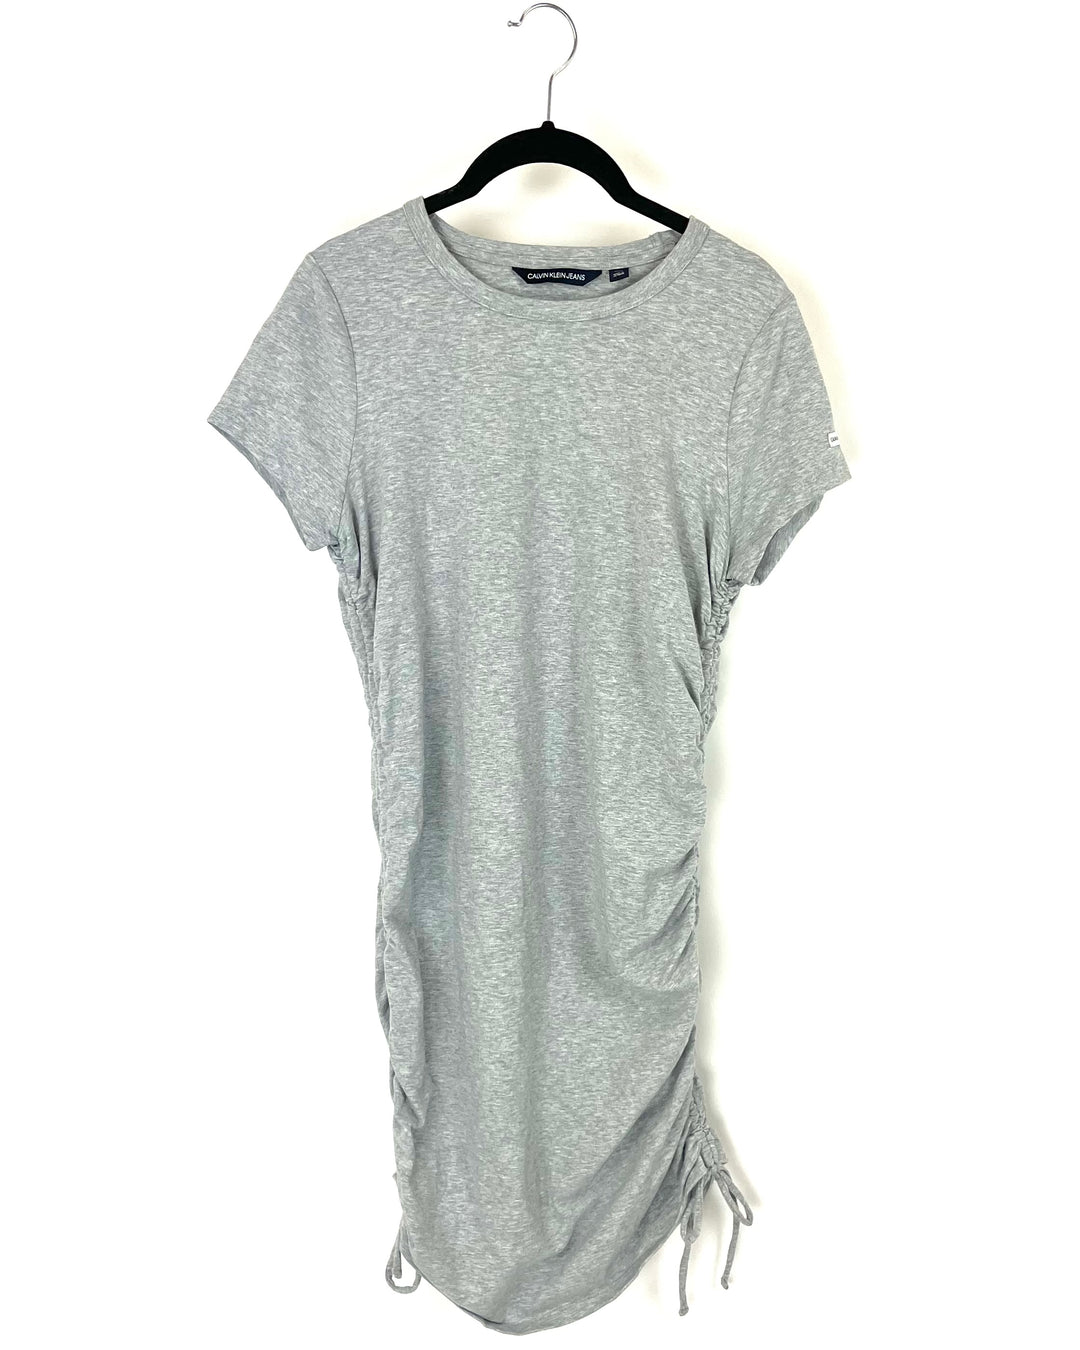 Grey Drawstring Dress - Size 4/6